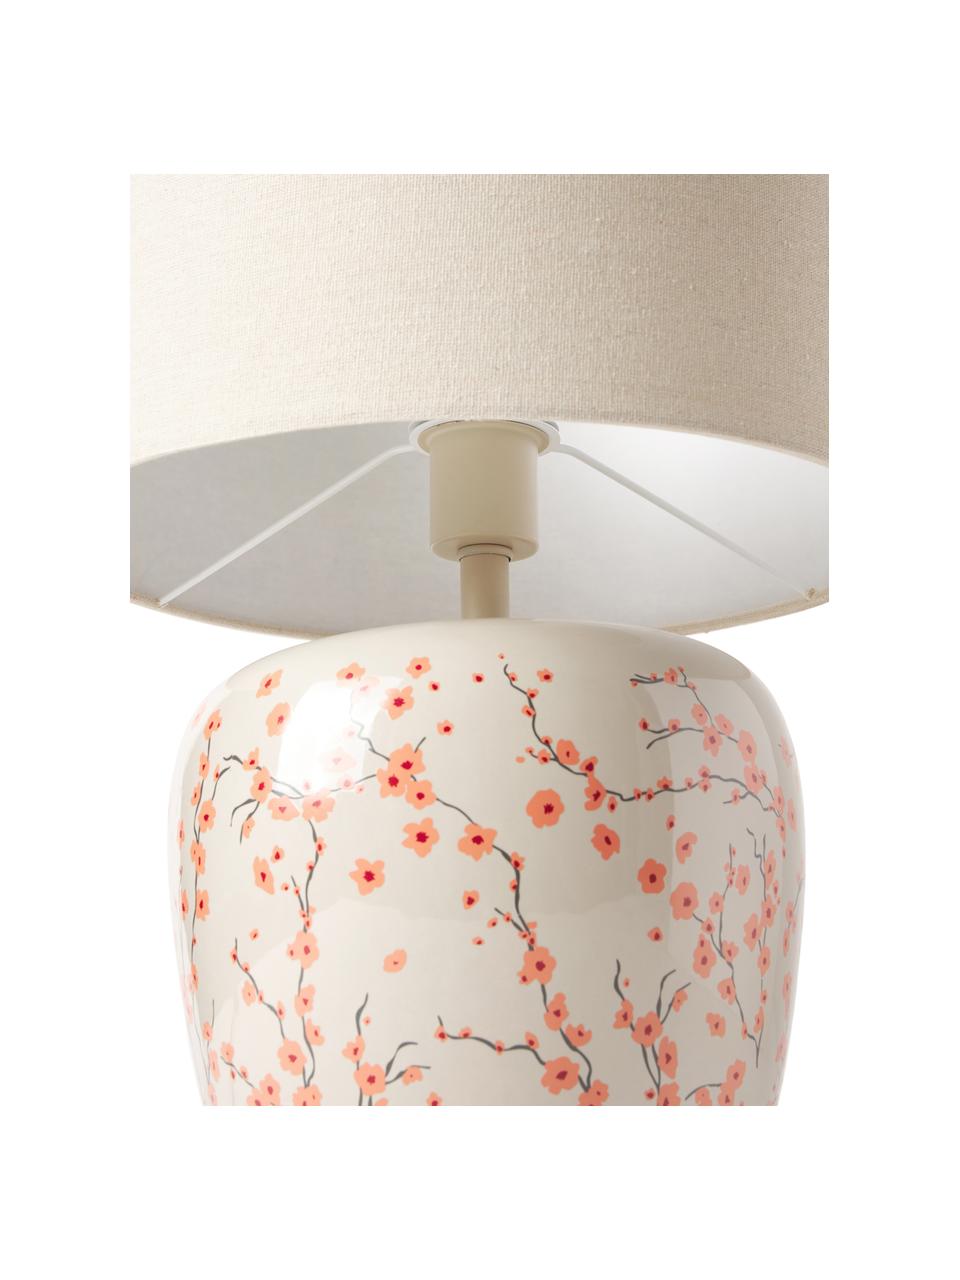 Grote keramische tafellamp Eileen, Lampenkap: 100% polyester, Lampvoet: keramiek, Beige, glanzend, Ø 33 x H 48 cm